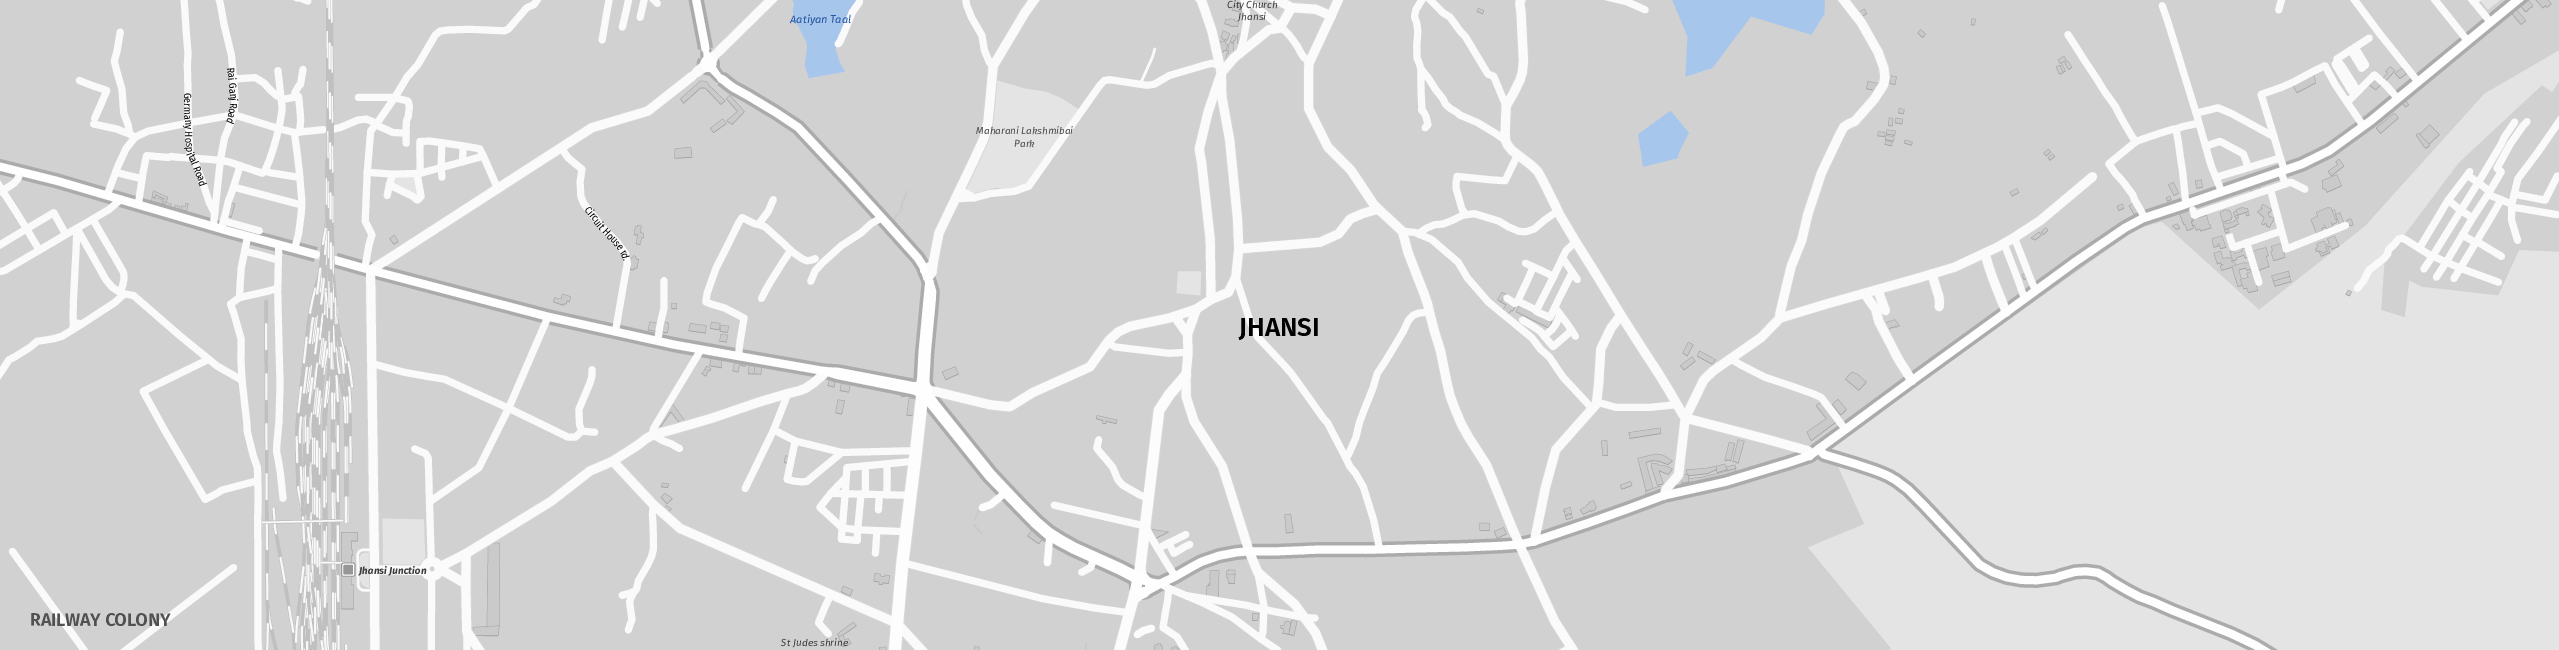 Stadtplan Jhansi zum Downloaden.